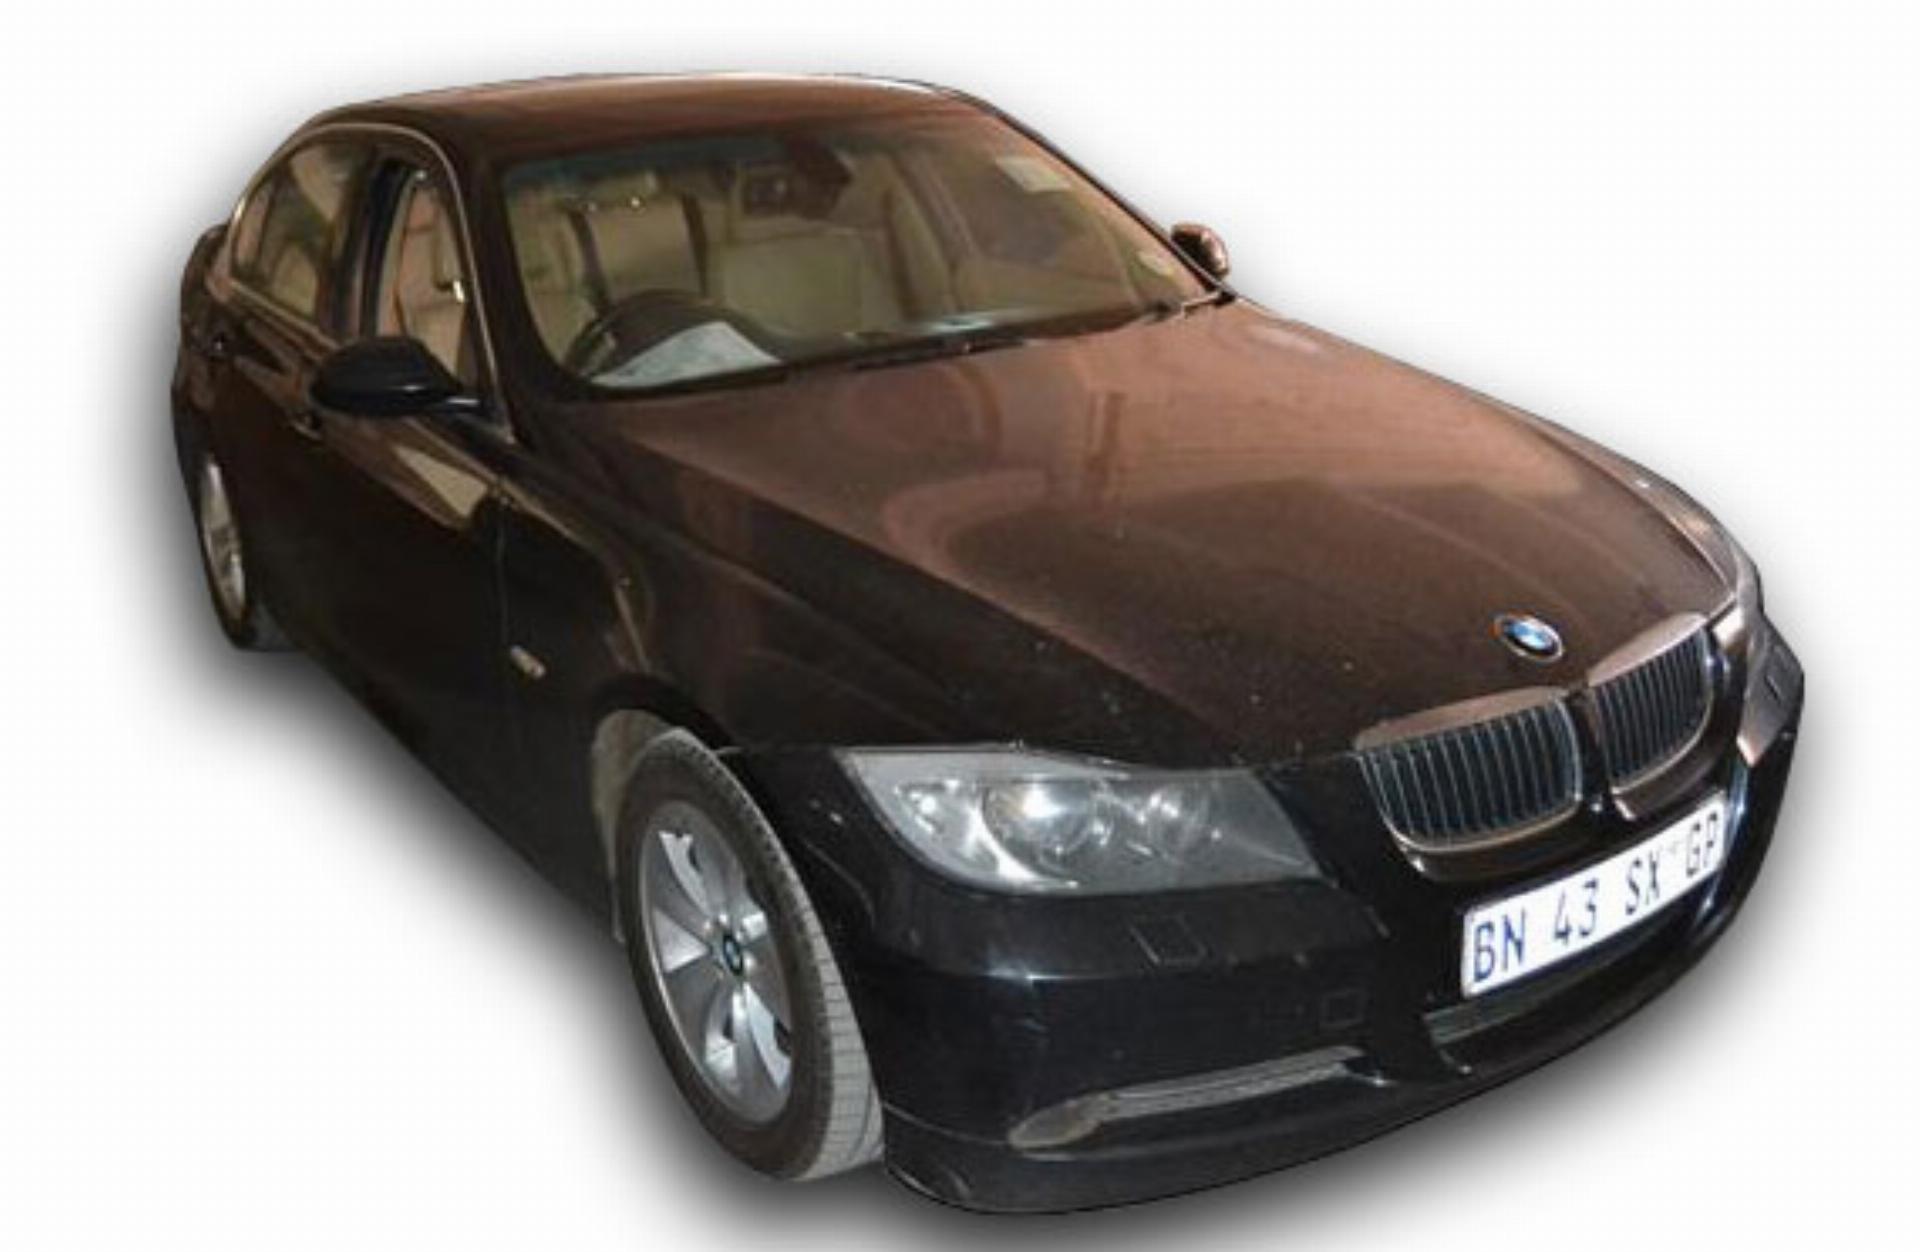 Repossessed BMW 3 Series 325I (E90) 2006 on auction - MC29208